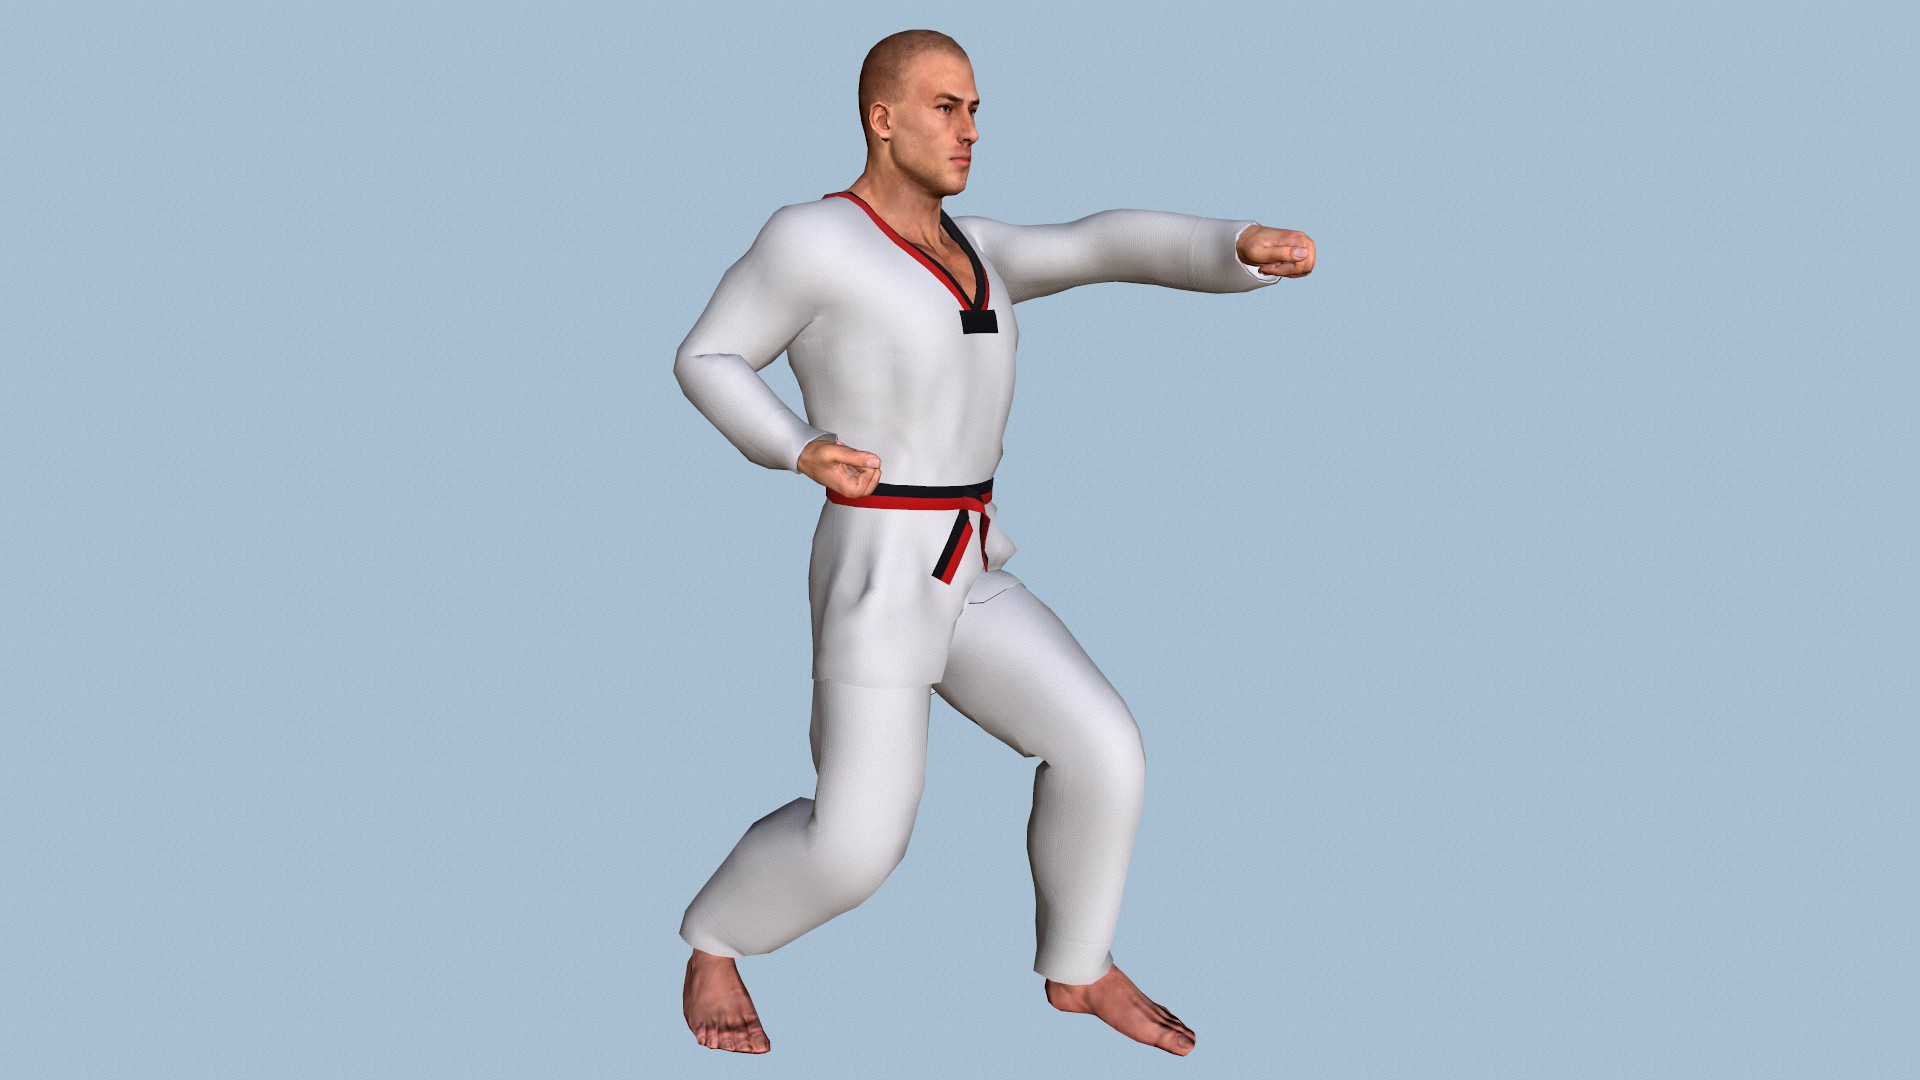 Taekwondo fighter